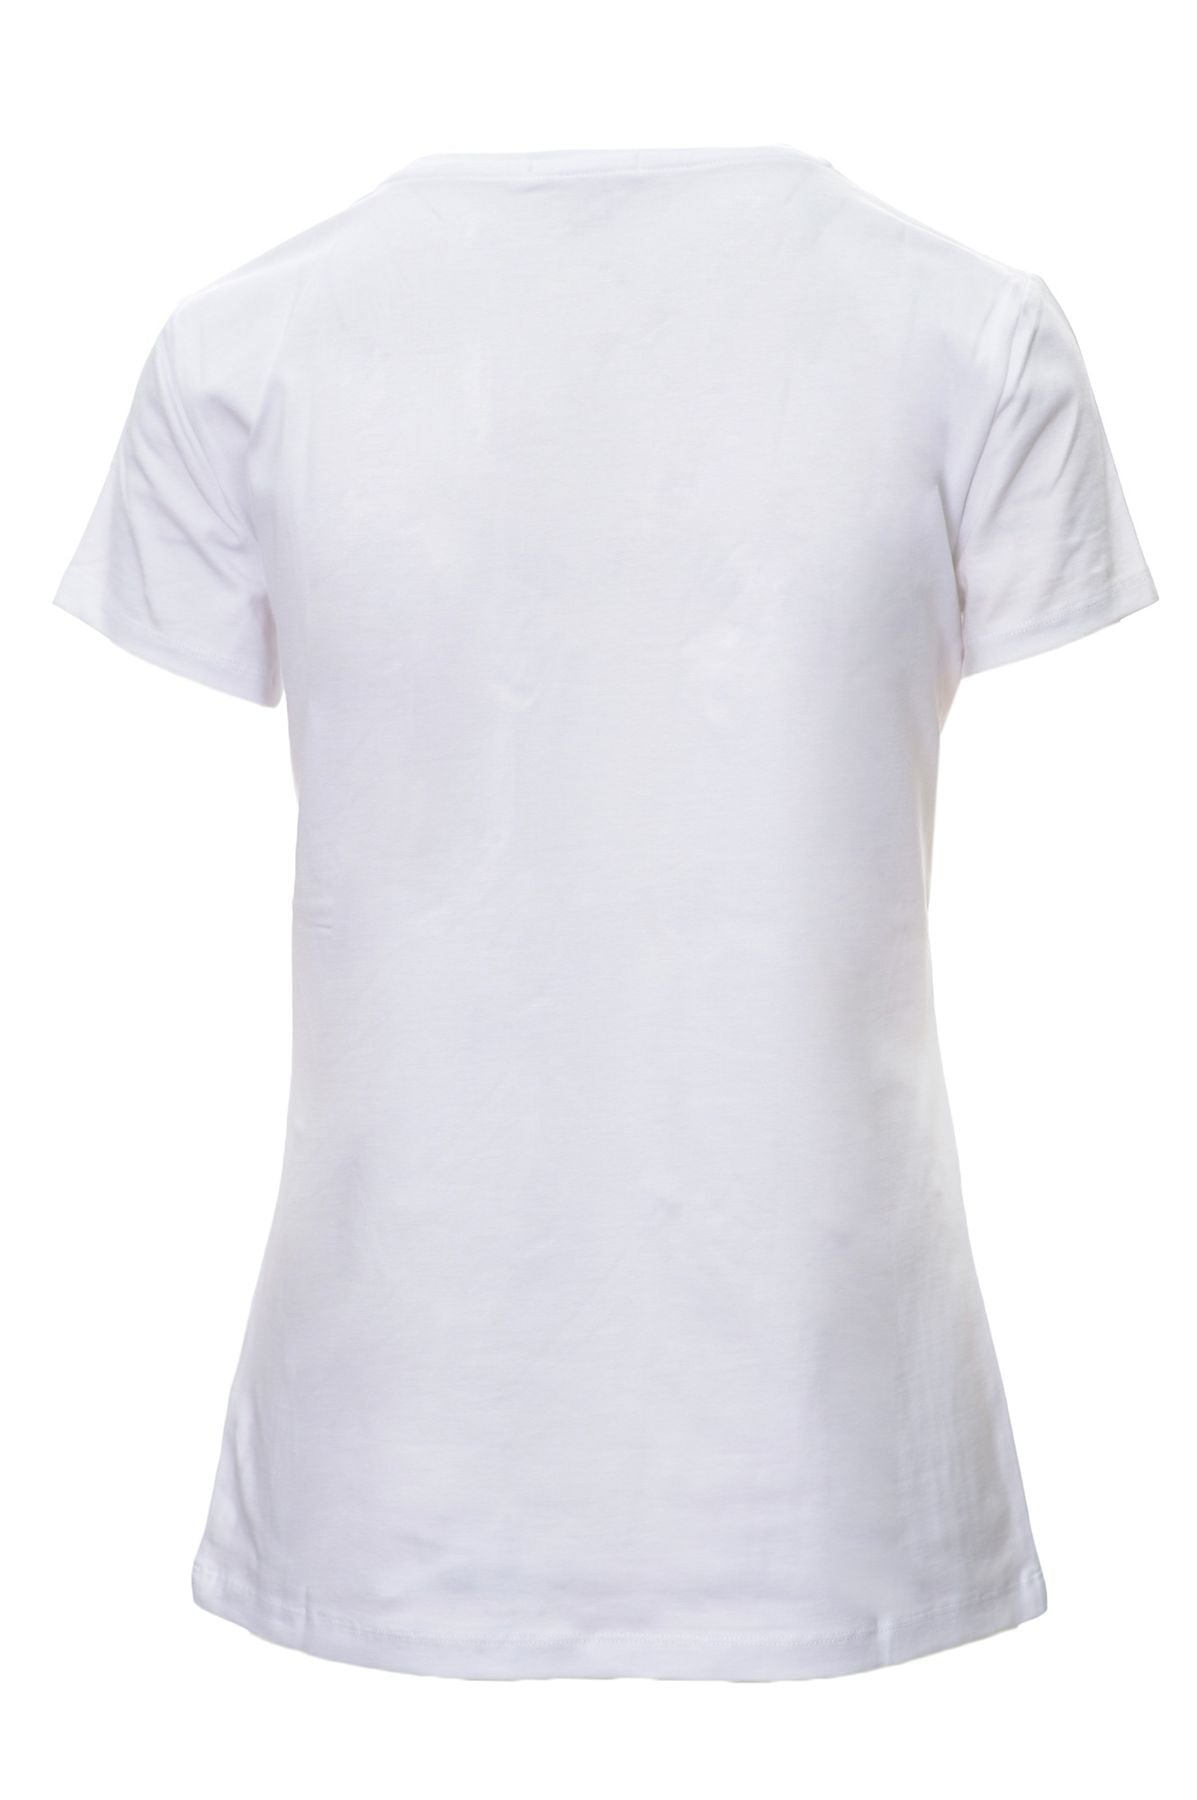 BARBOUR Camiseta Algodón Primavera/Verano